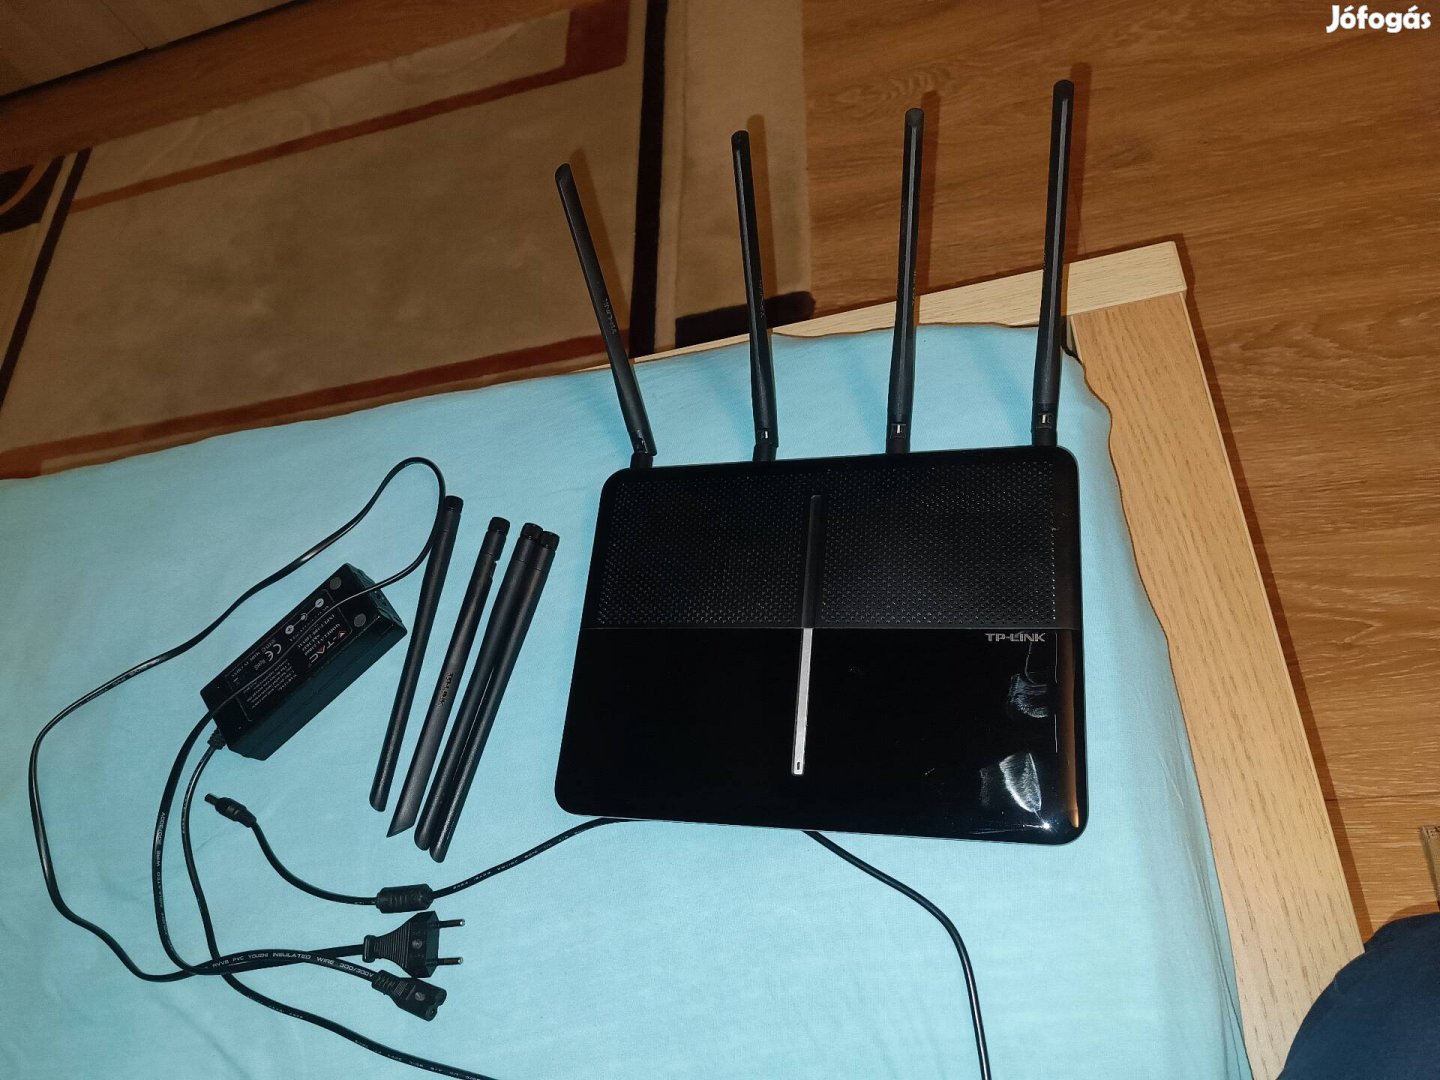 Eladó Tp-Link C2600 router